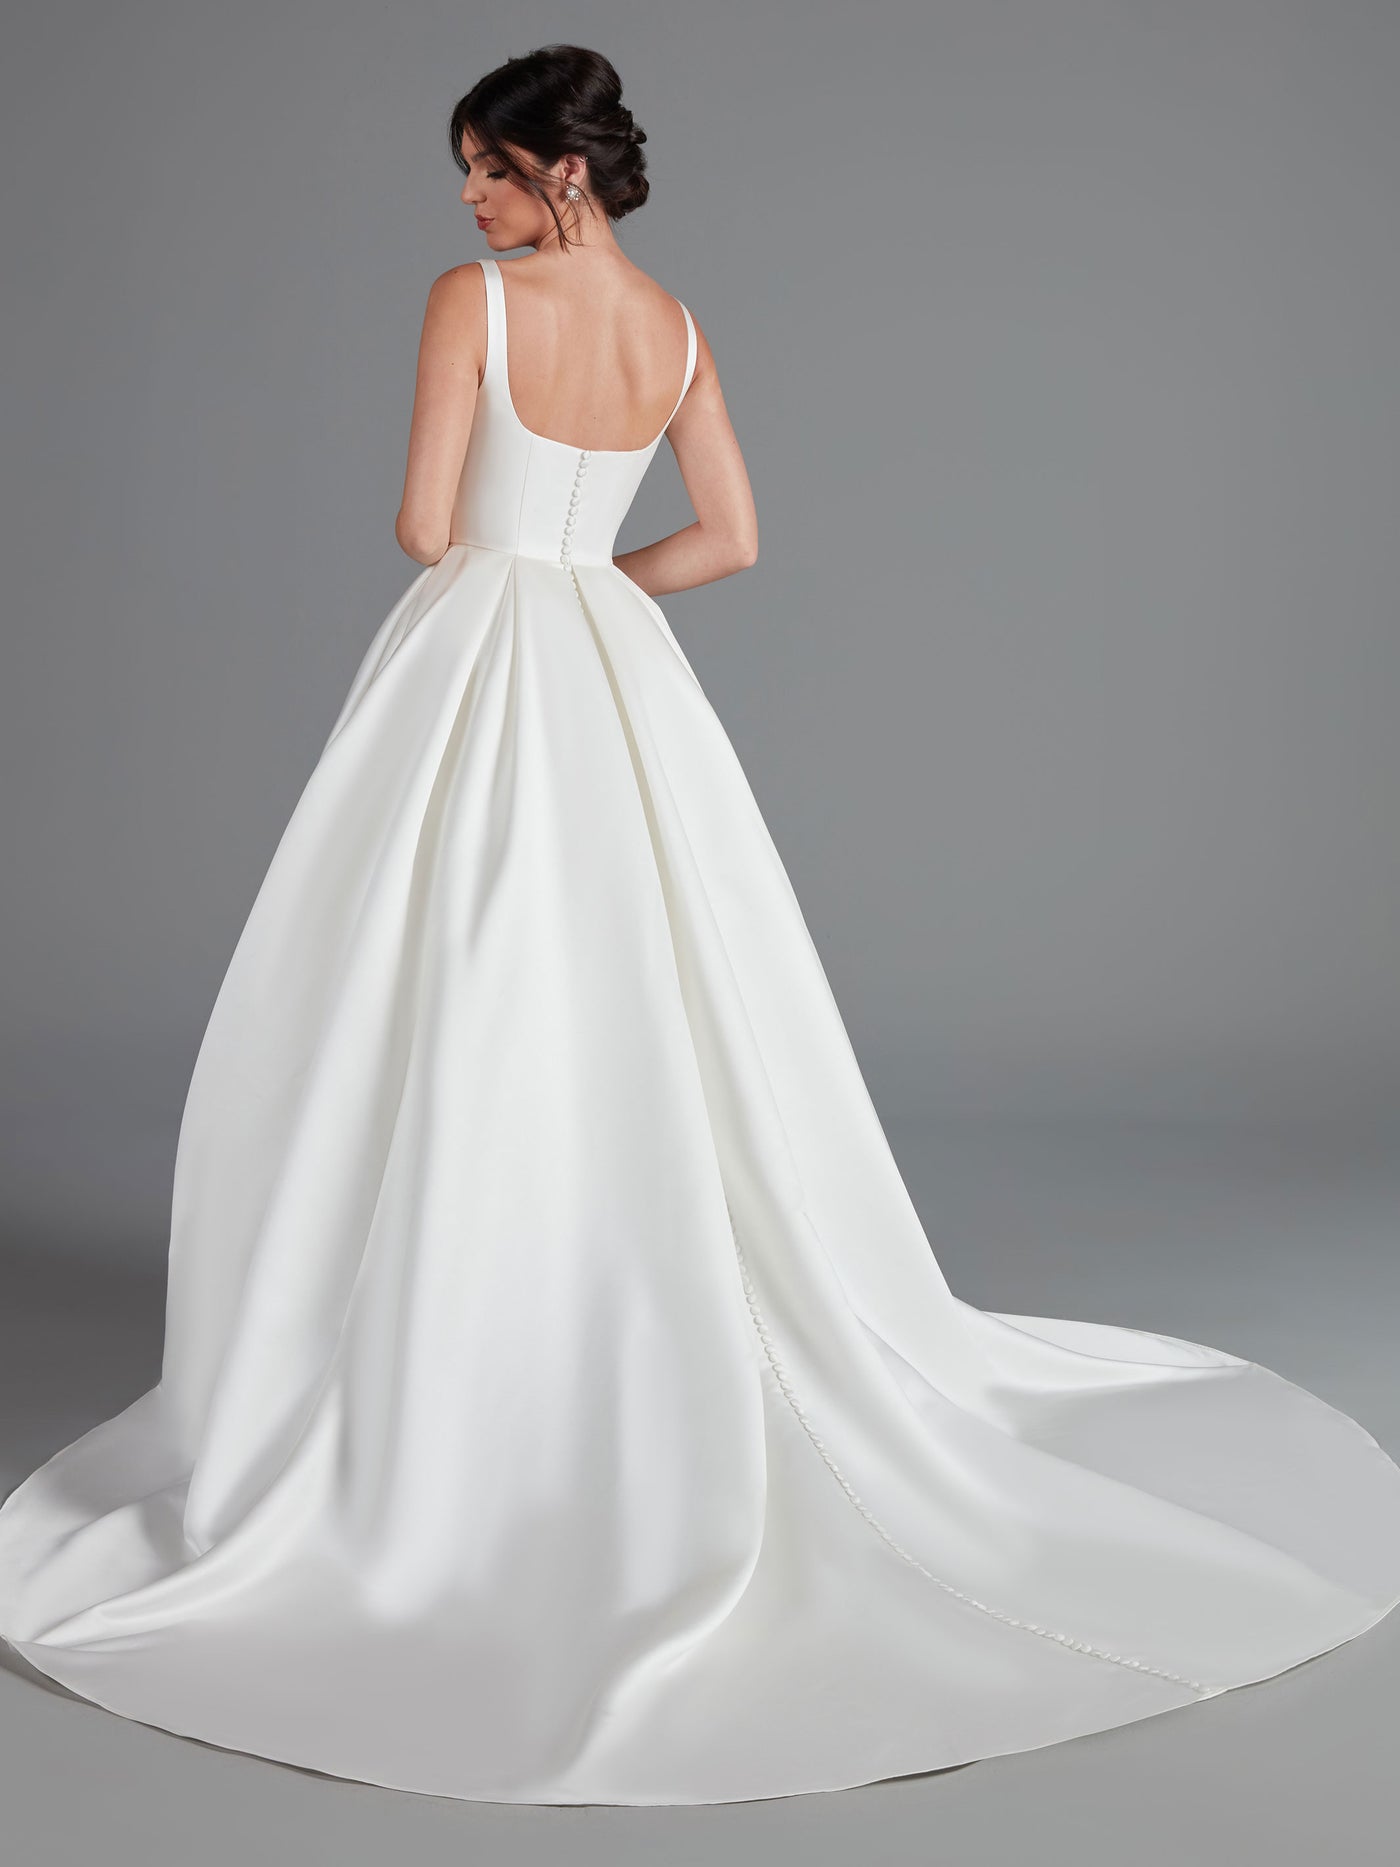 Chelsea Simple Satin Wedding Dress - Avery Austin